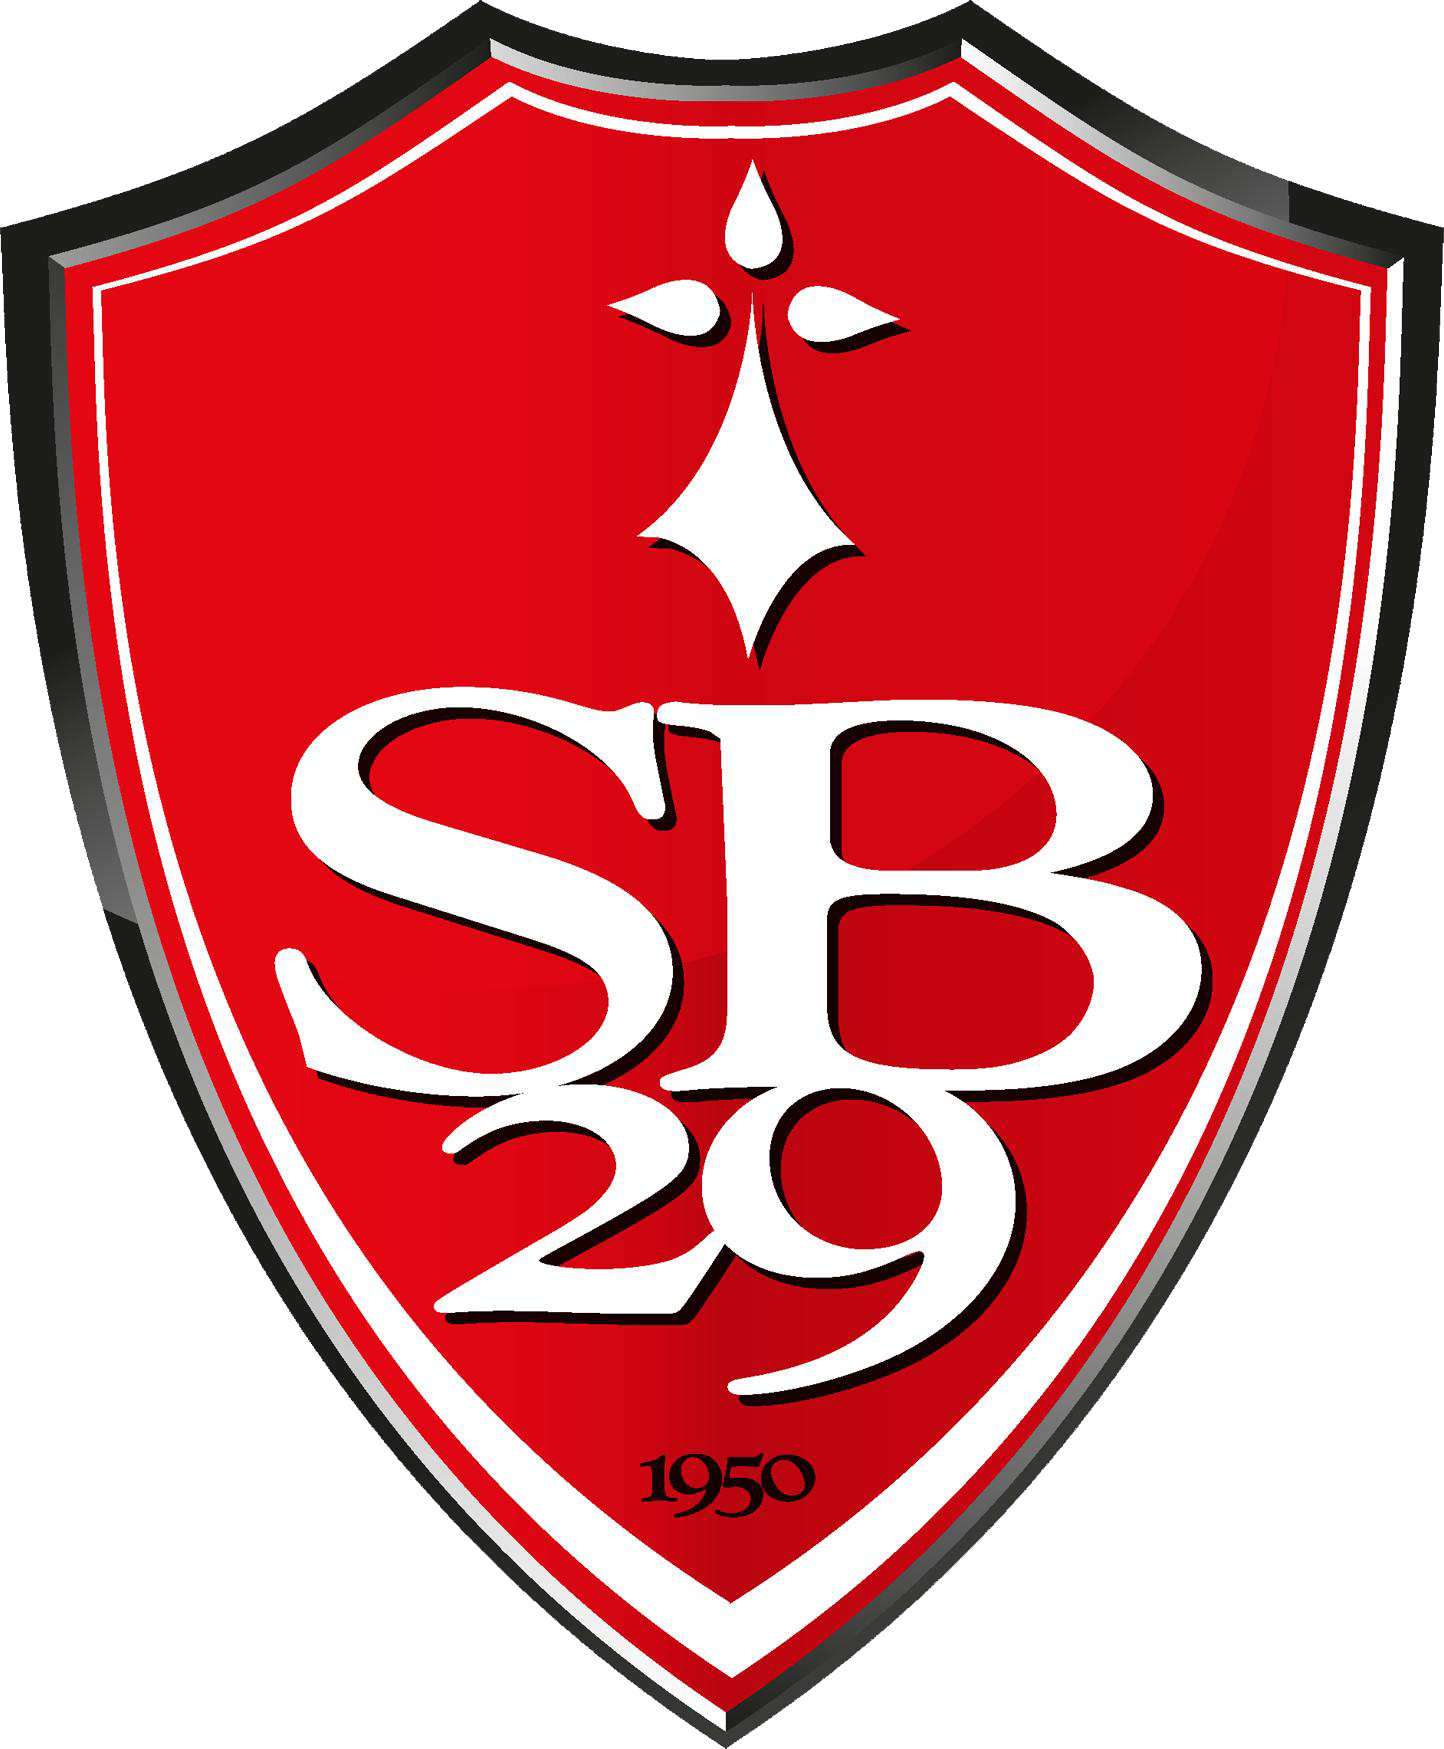 SB29.png